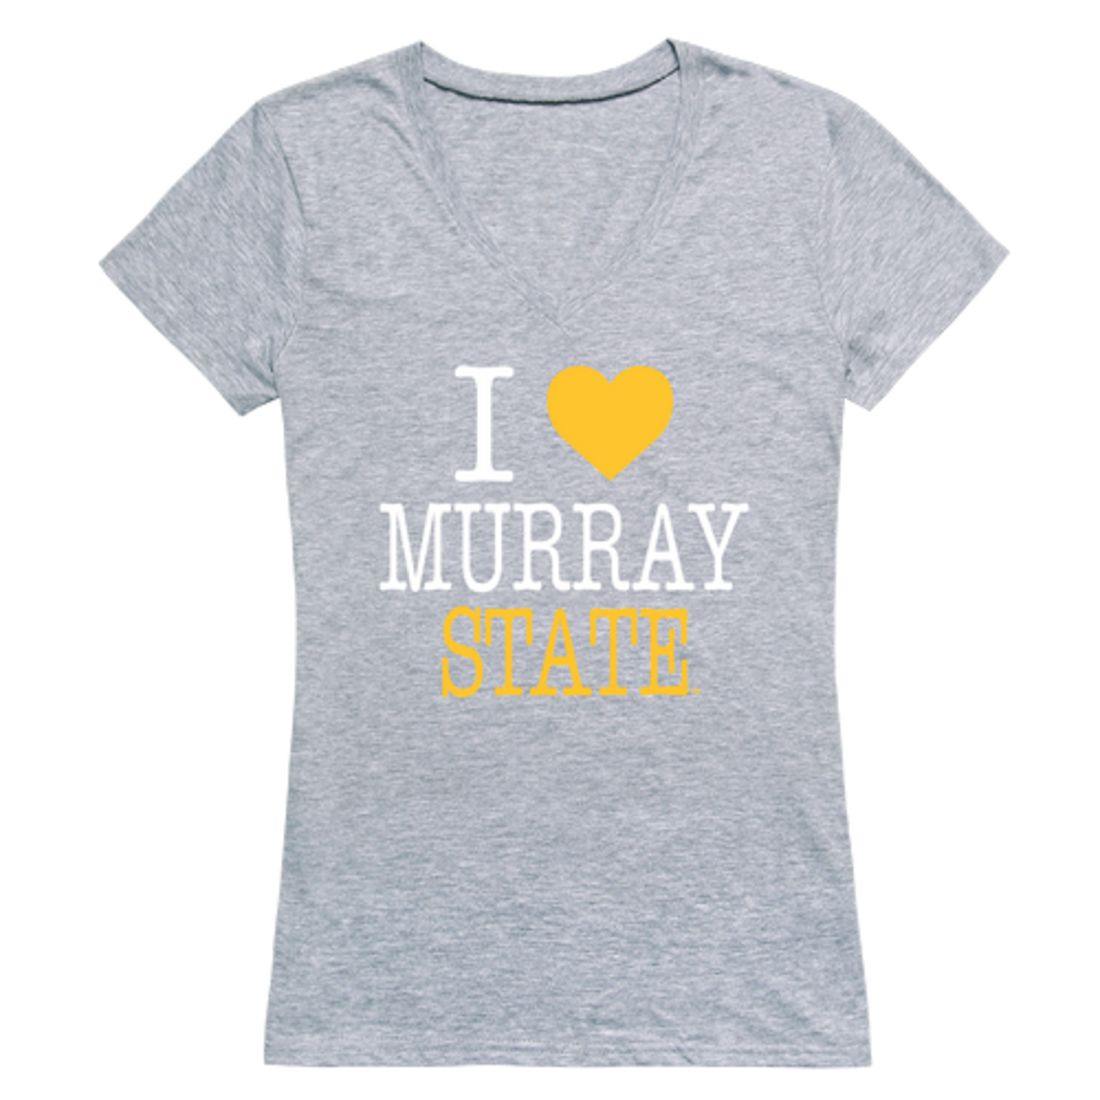 I Love MSU Murray State University Racers Womens T-Shirt-Campus-Wardrobe